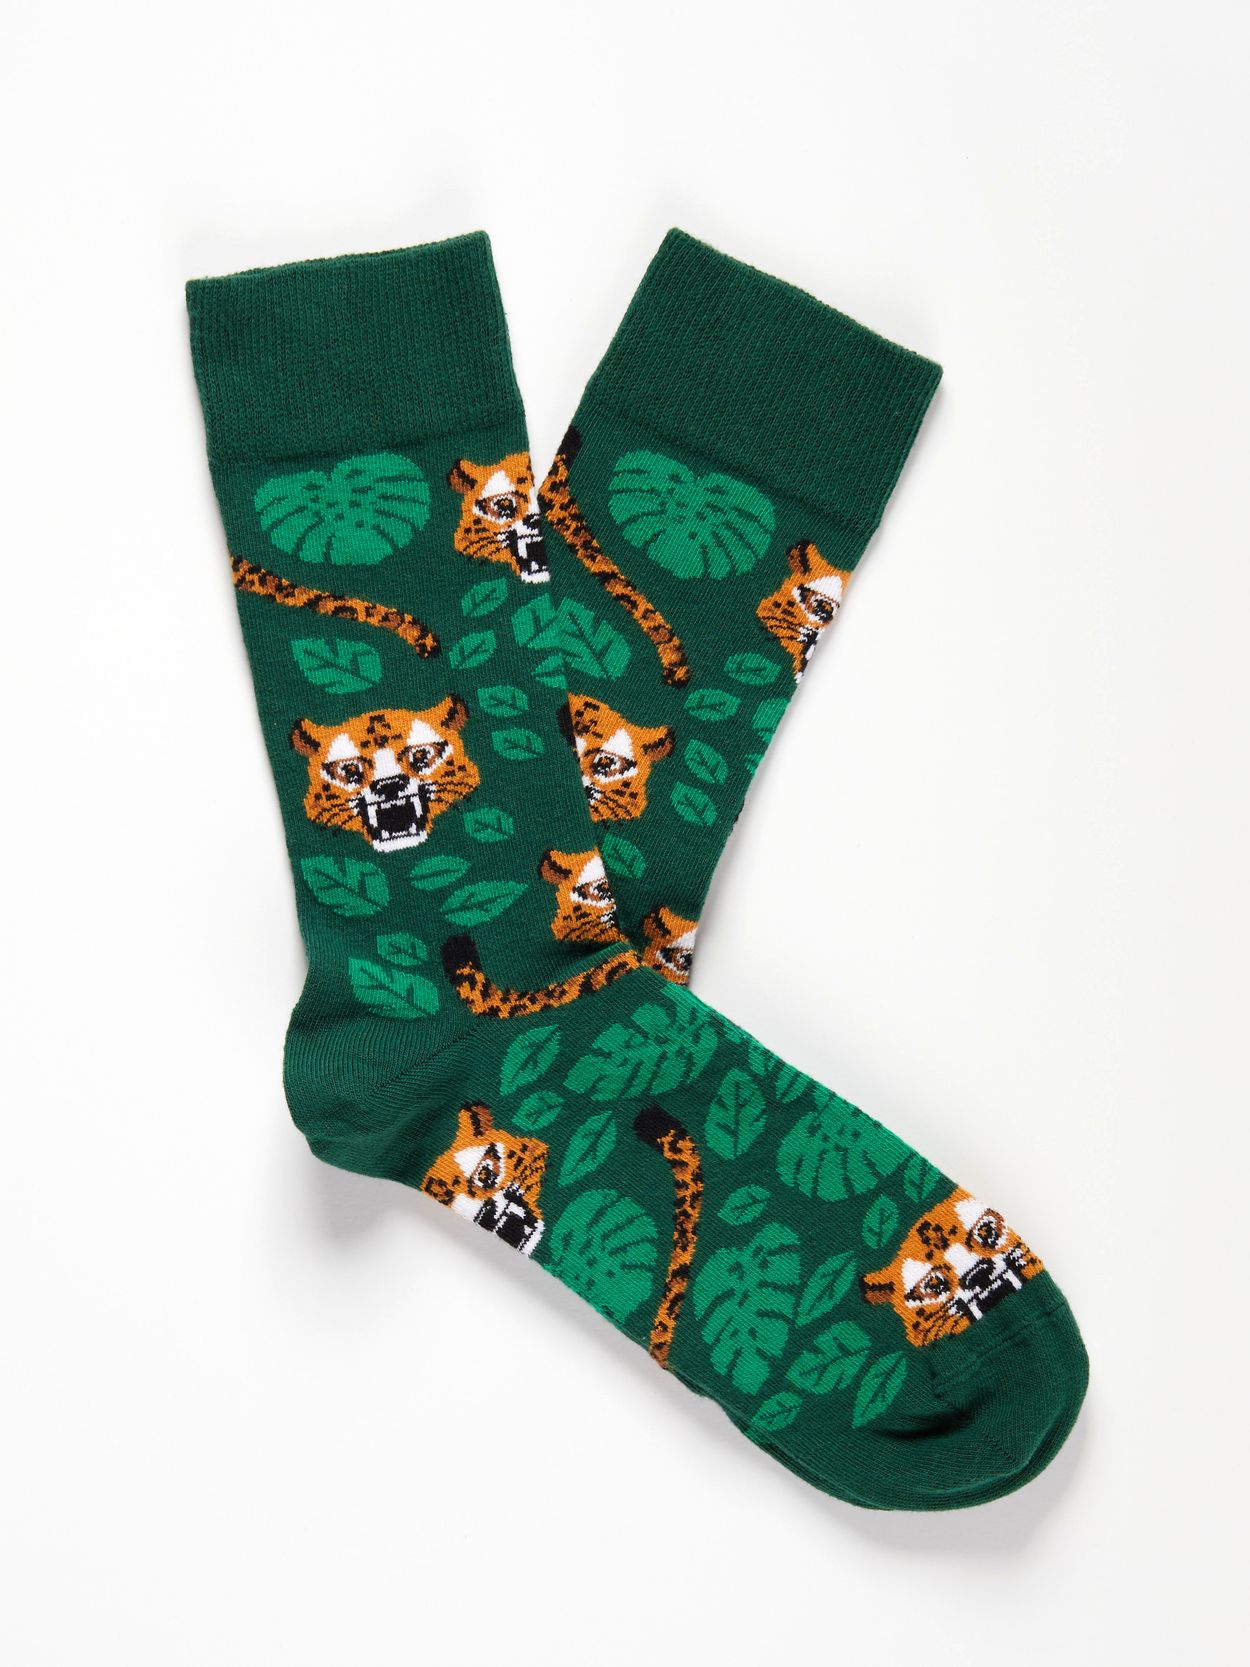 Green Socks Lagos